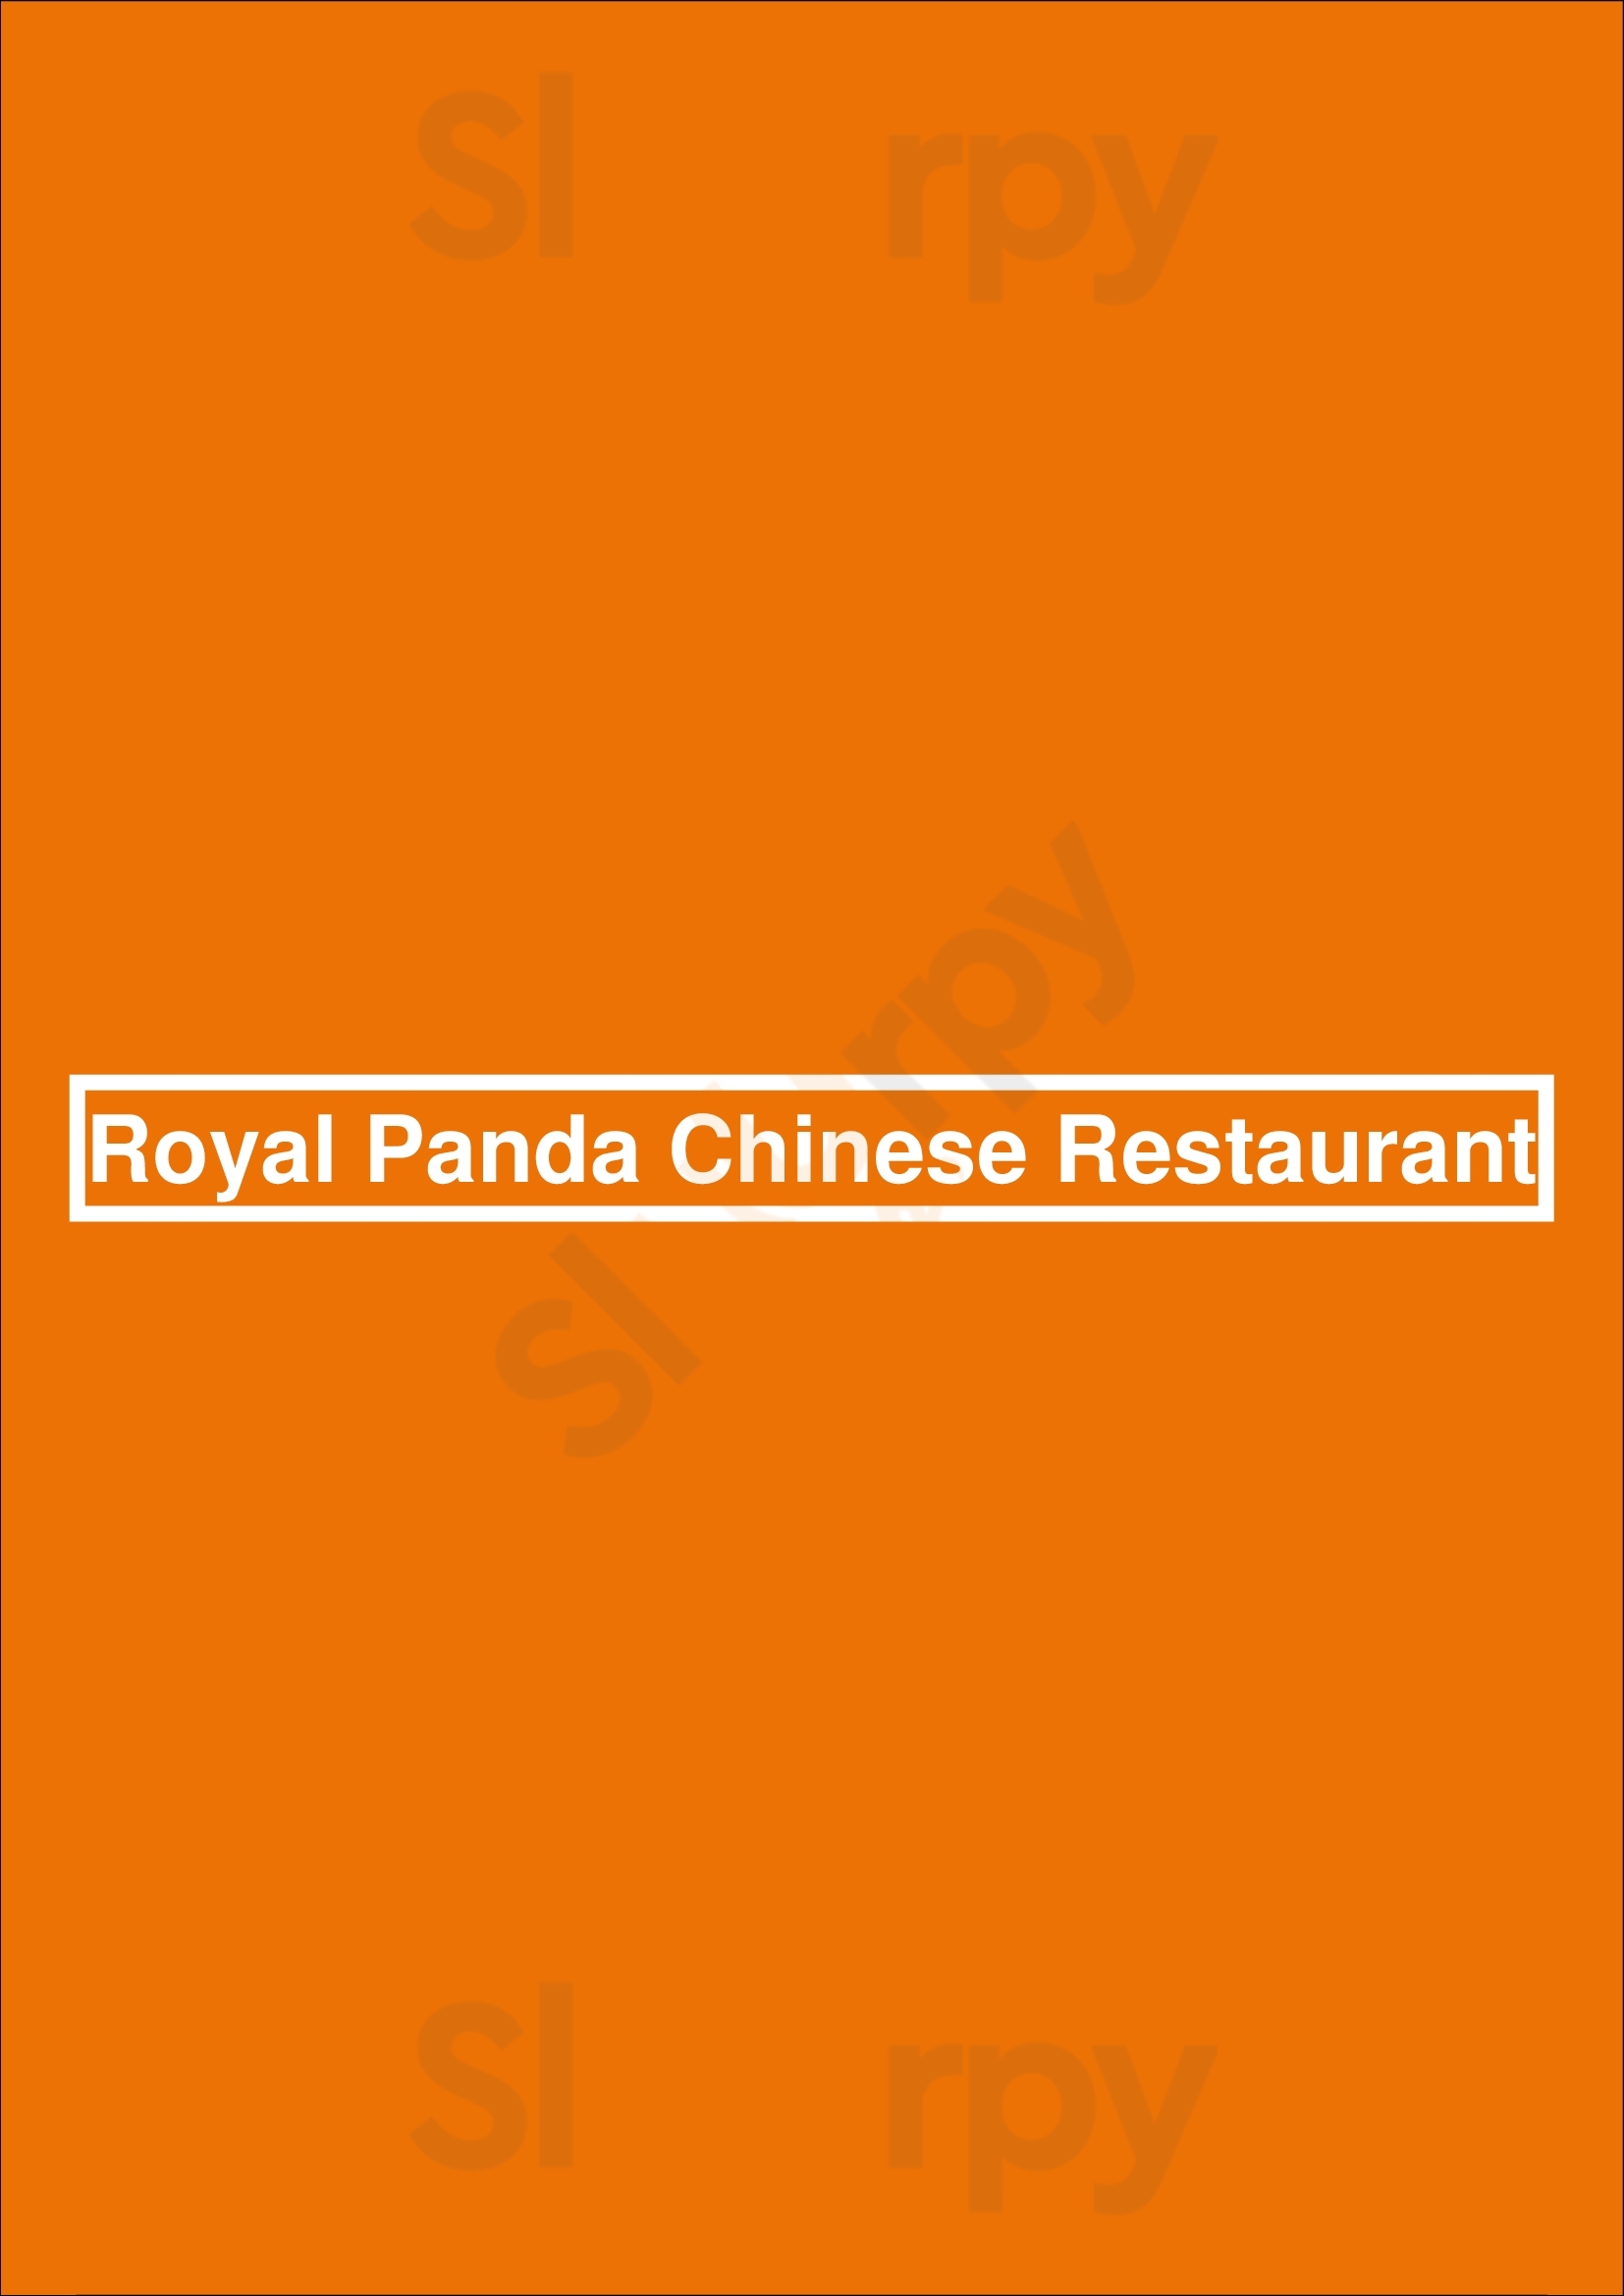 Royal Panda Chinese Restaurant Arlington Menu - 1